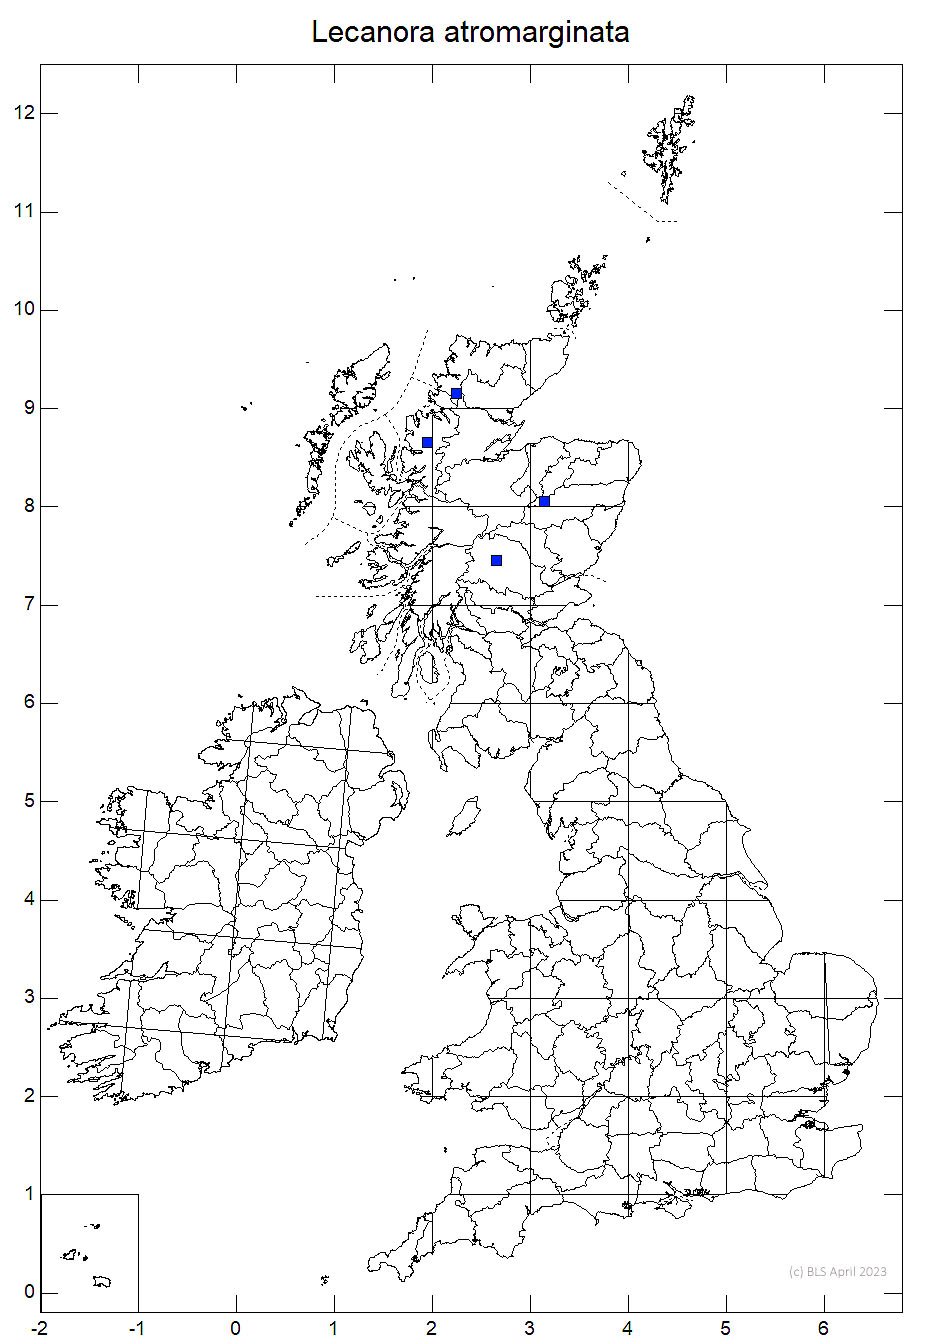 Lecanora atromarginata 10km sq distribution map